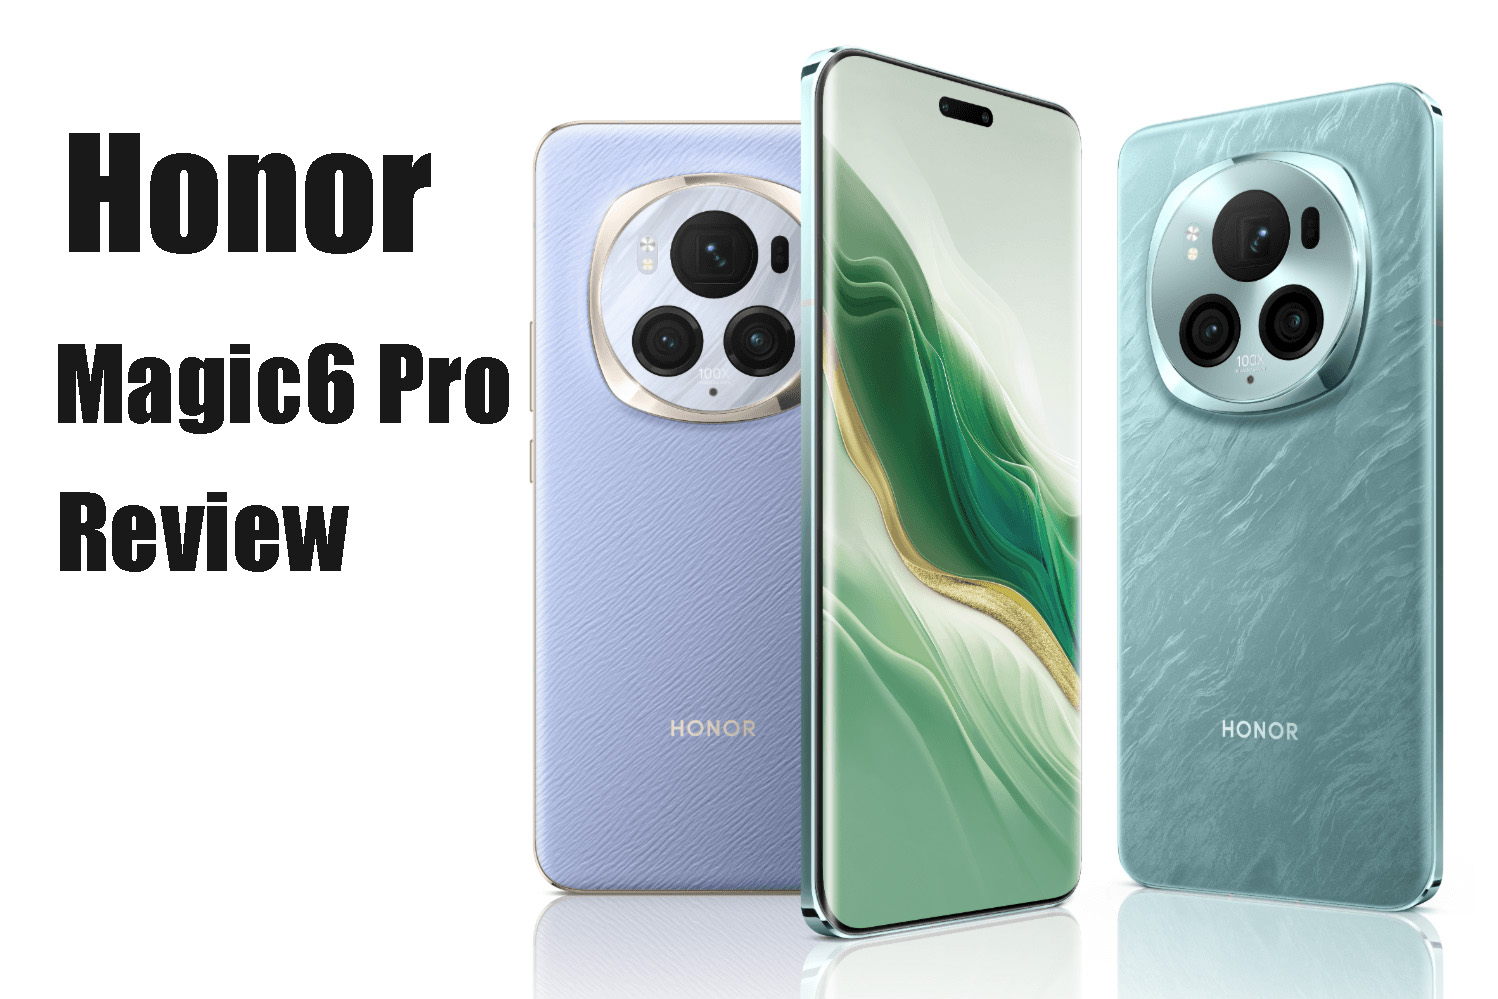 Honor Magic6 Pro Review